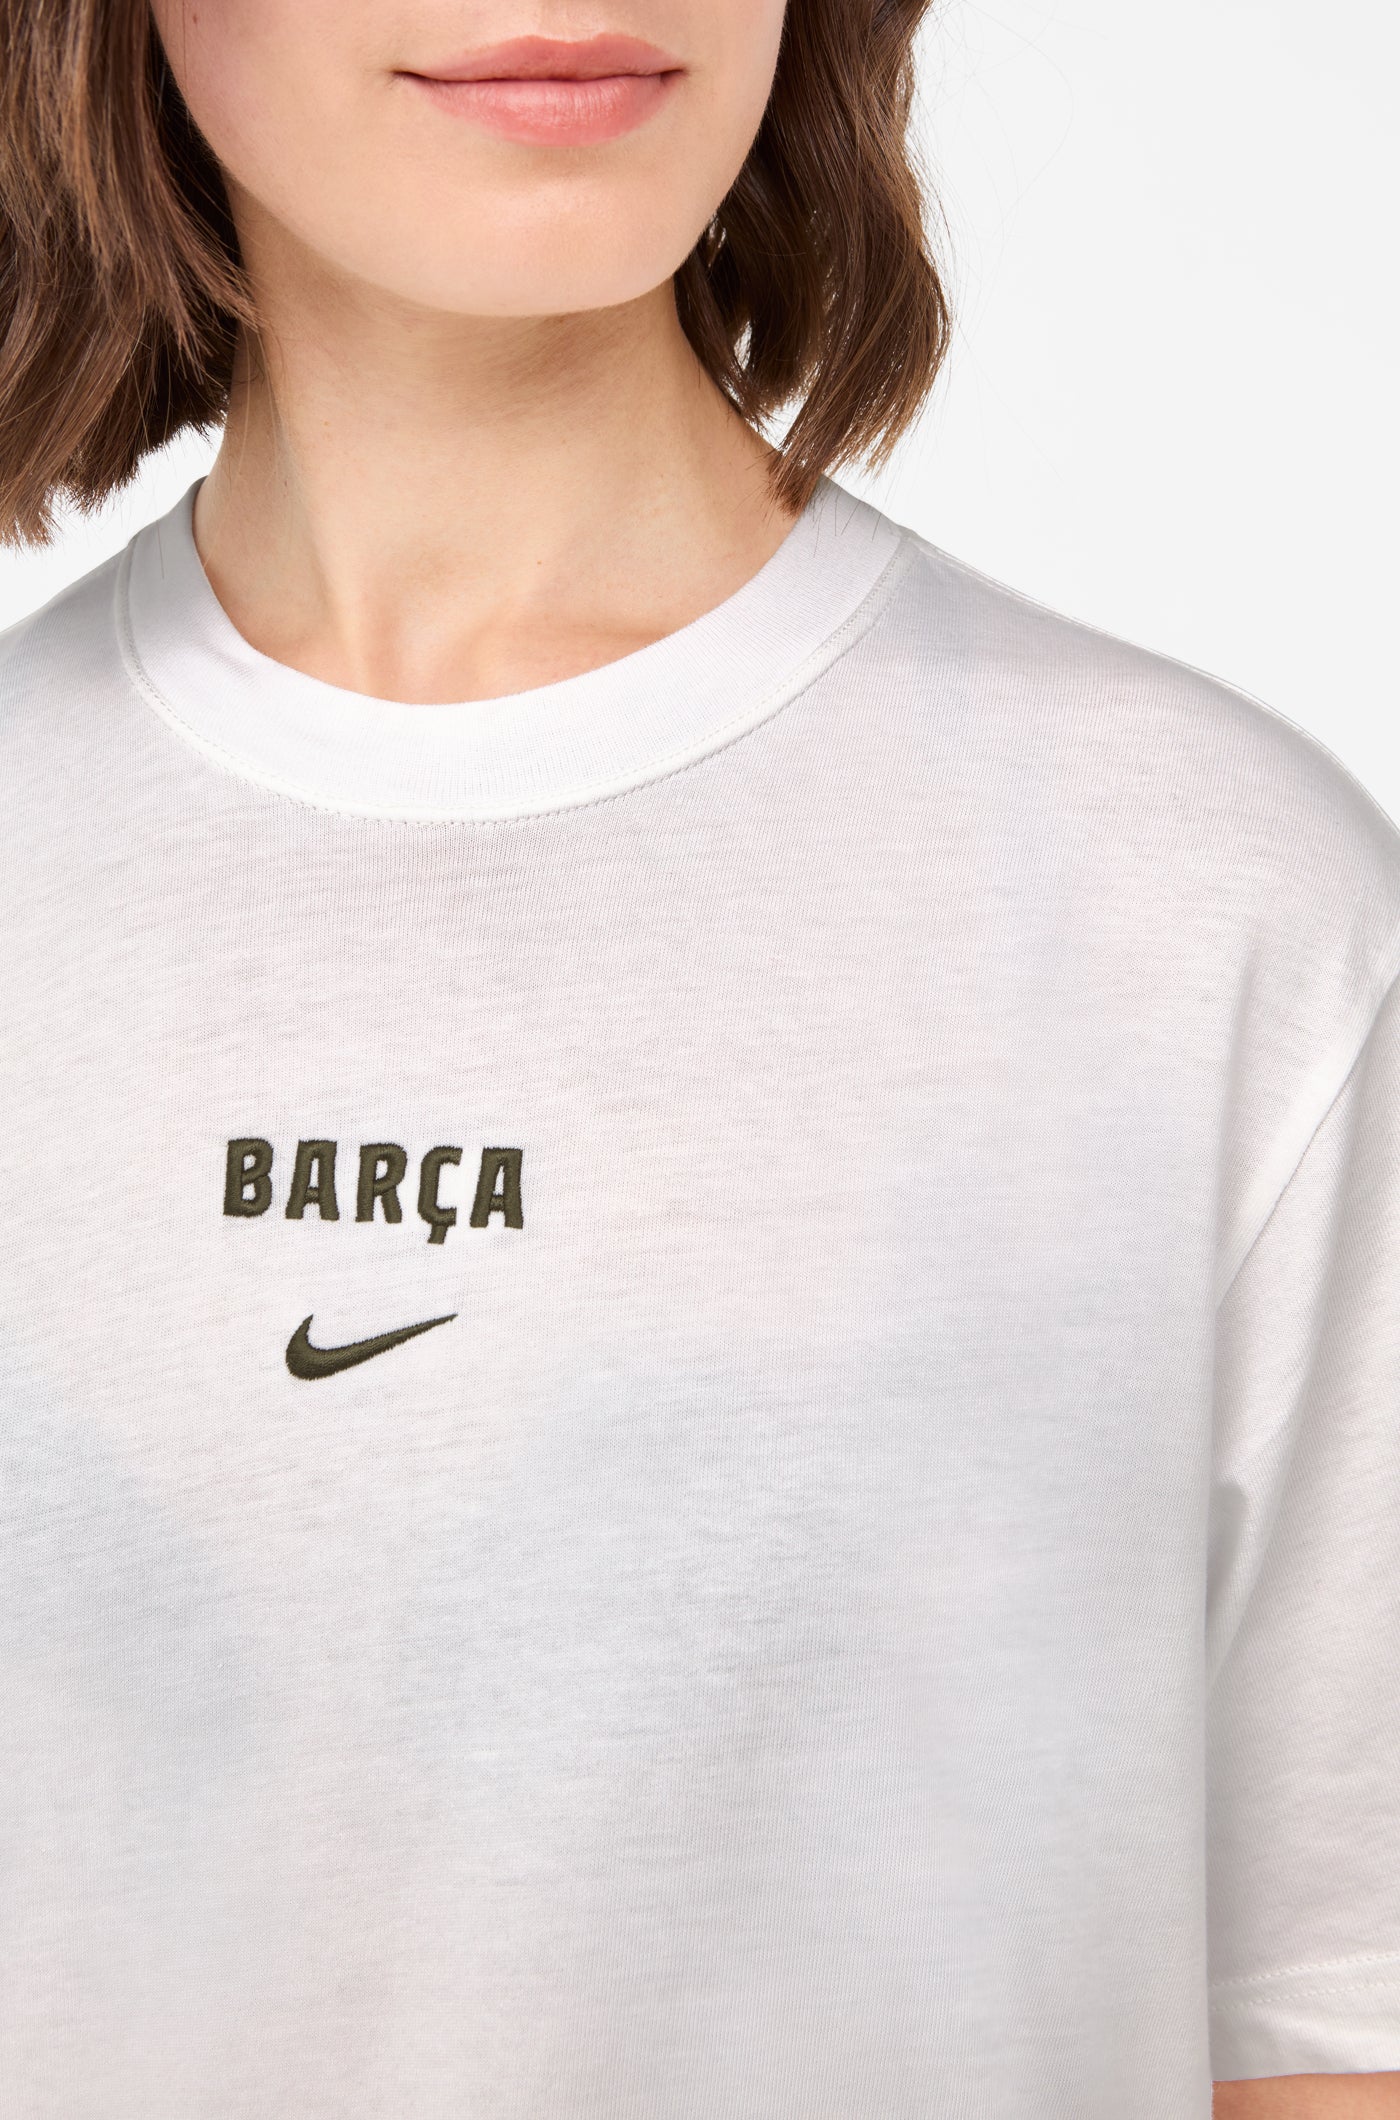 Samarreta màniga curta blanca Barça Nike - Dona